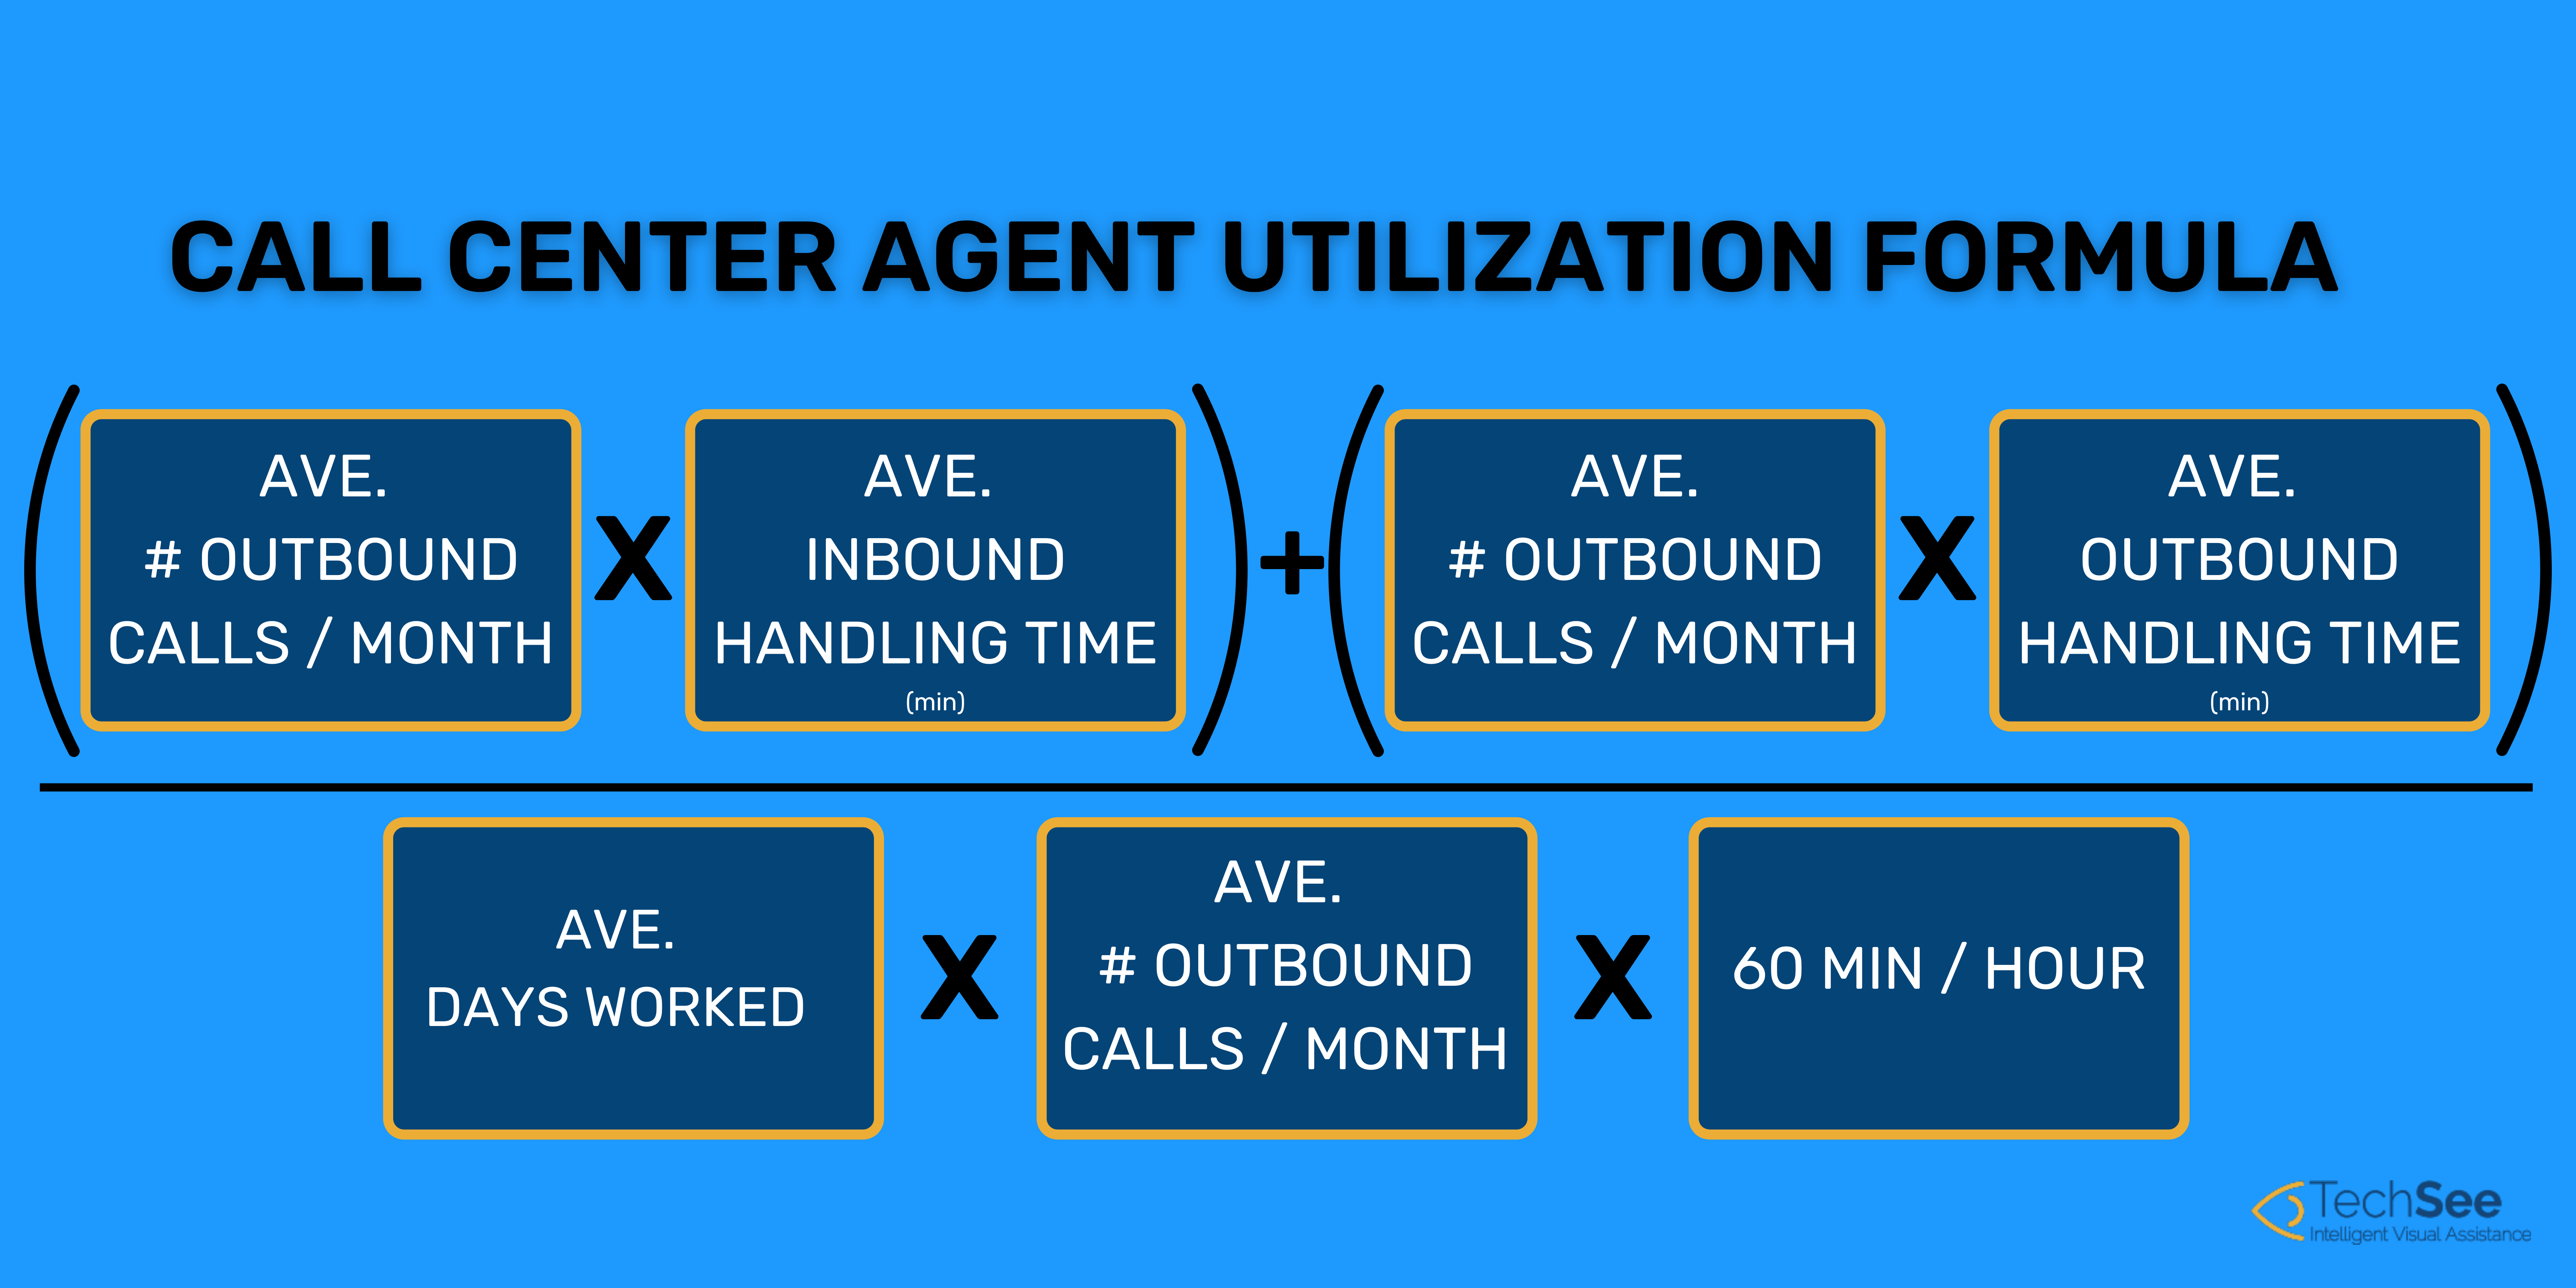 Call Center Agent Utilization Formula